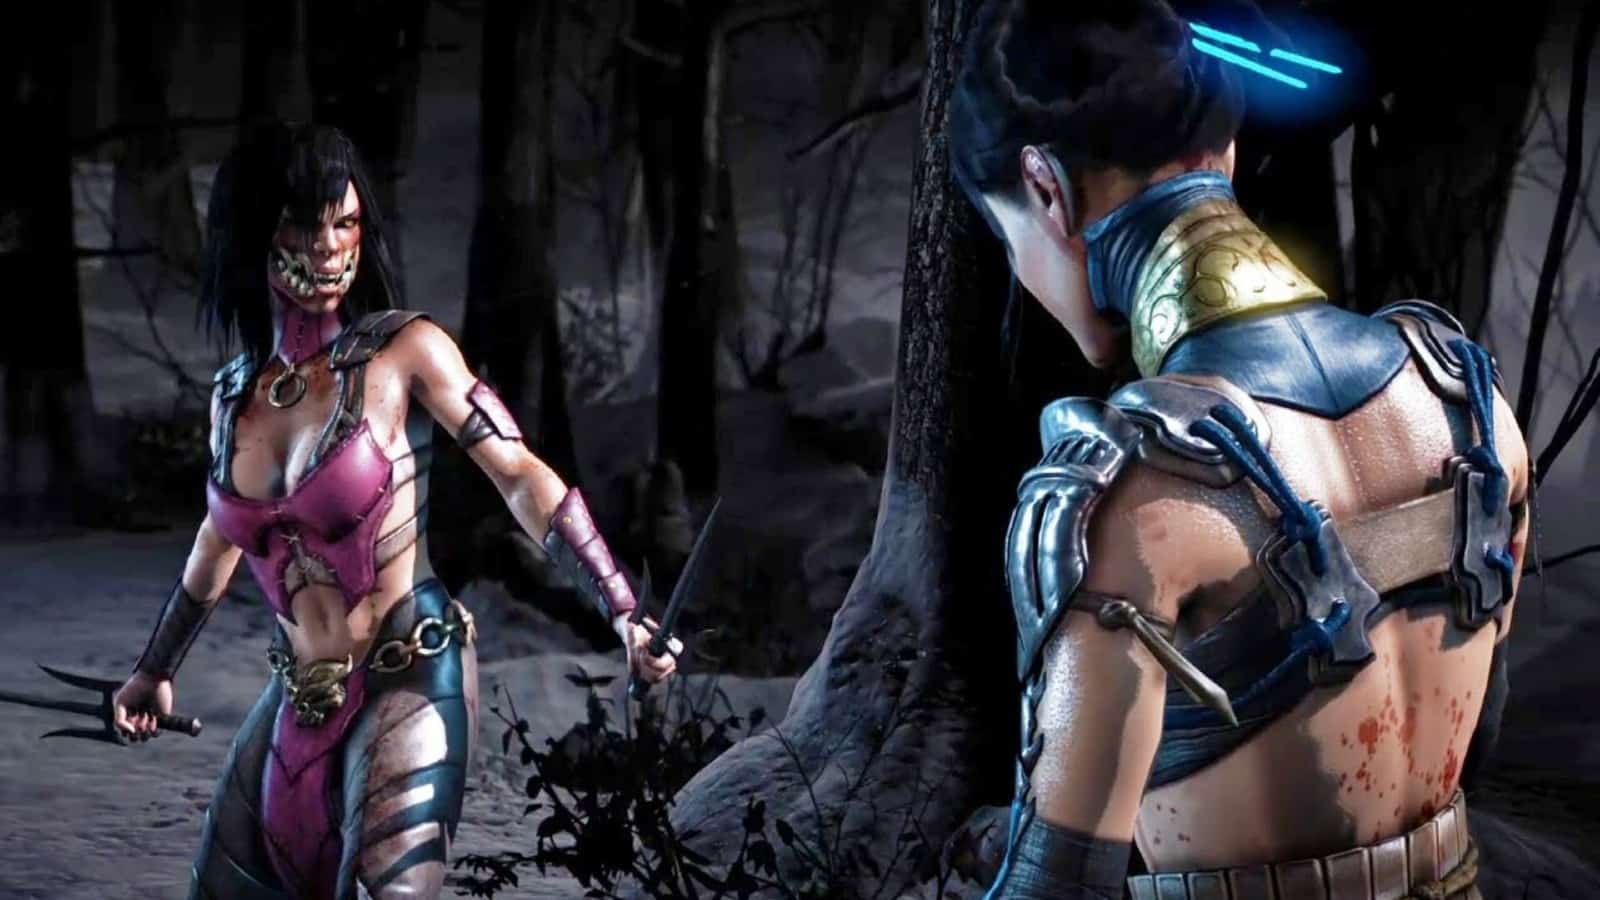 Female Mortal Kombat characters